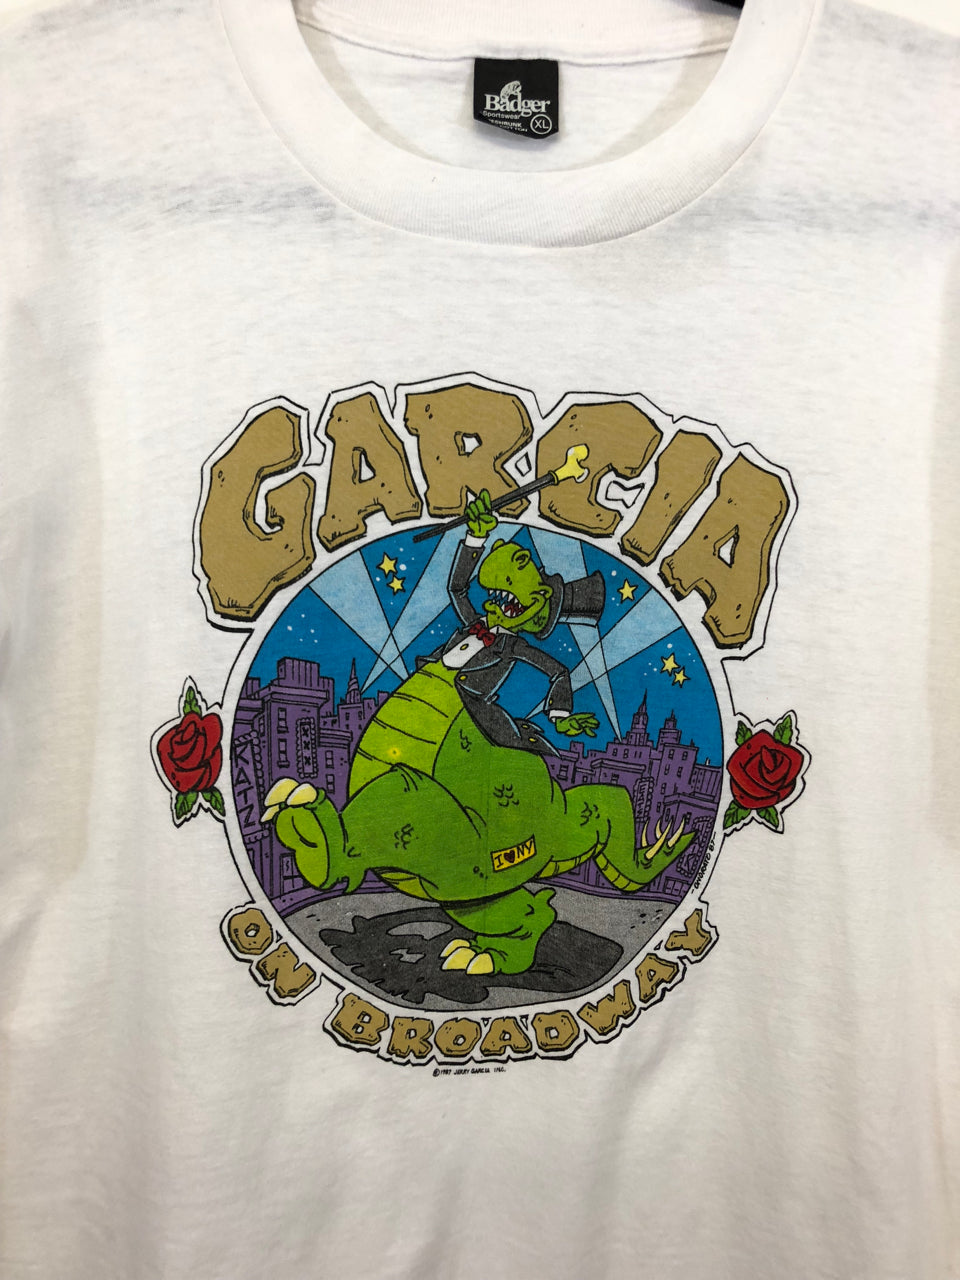 1987 Garcia on Broadway T-Shirt